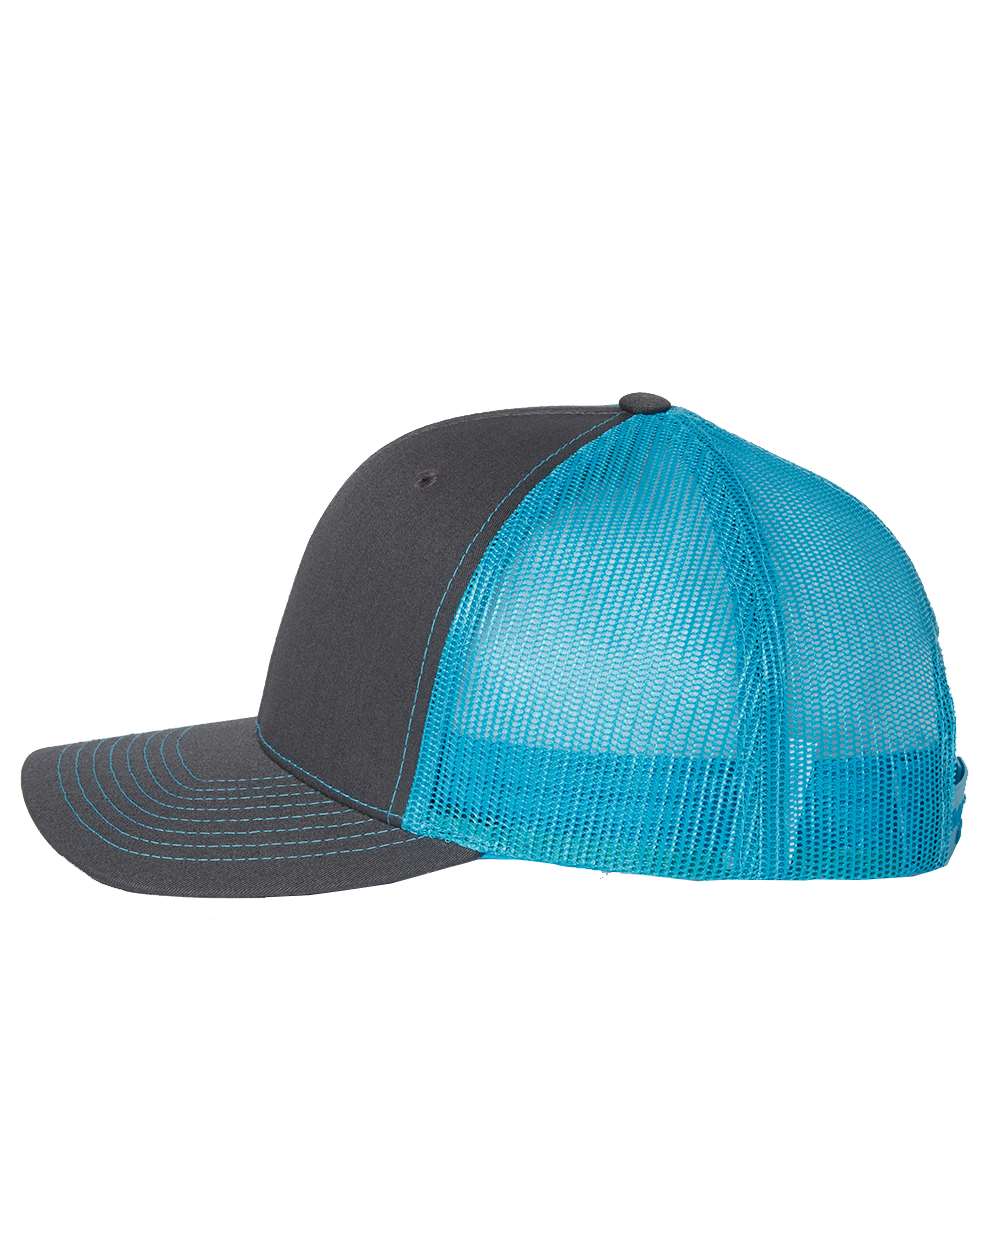 Busch Light Mountain Escape 3D Snapback Trucker Hat- Charcoal/ Neon Blue - Ten Gallon Hat Co.